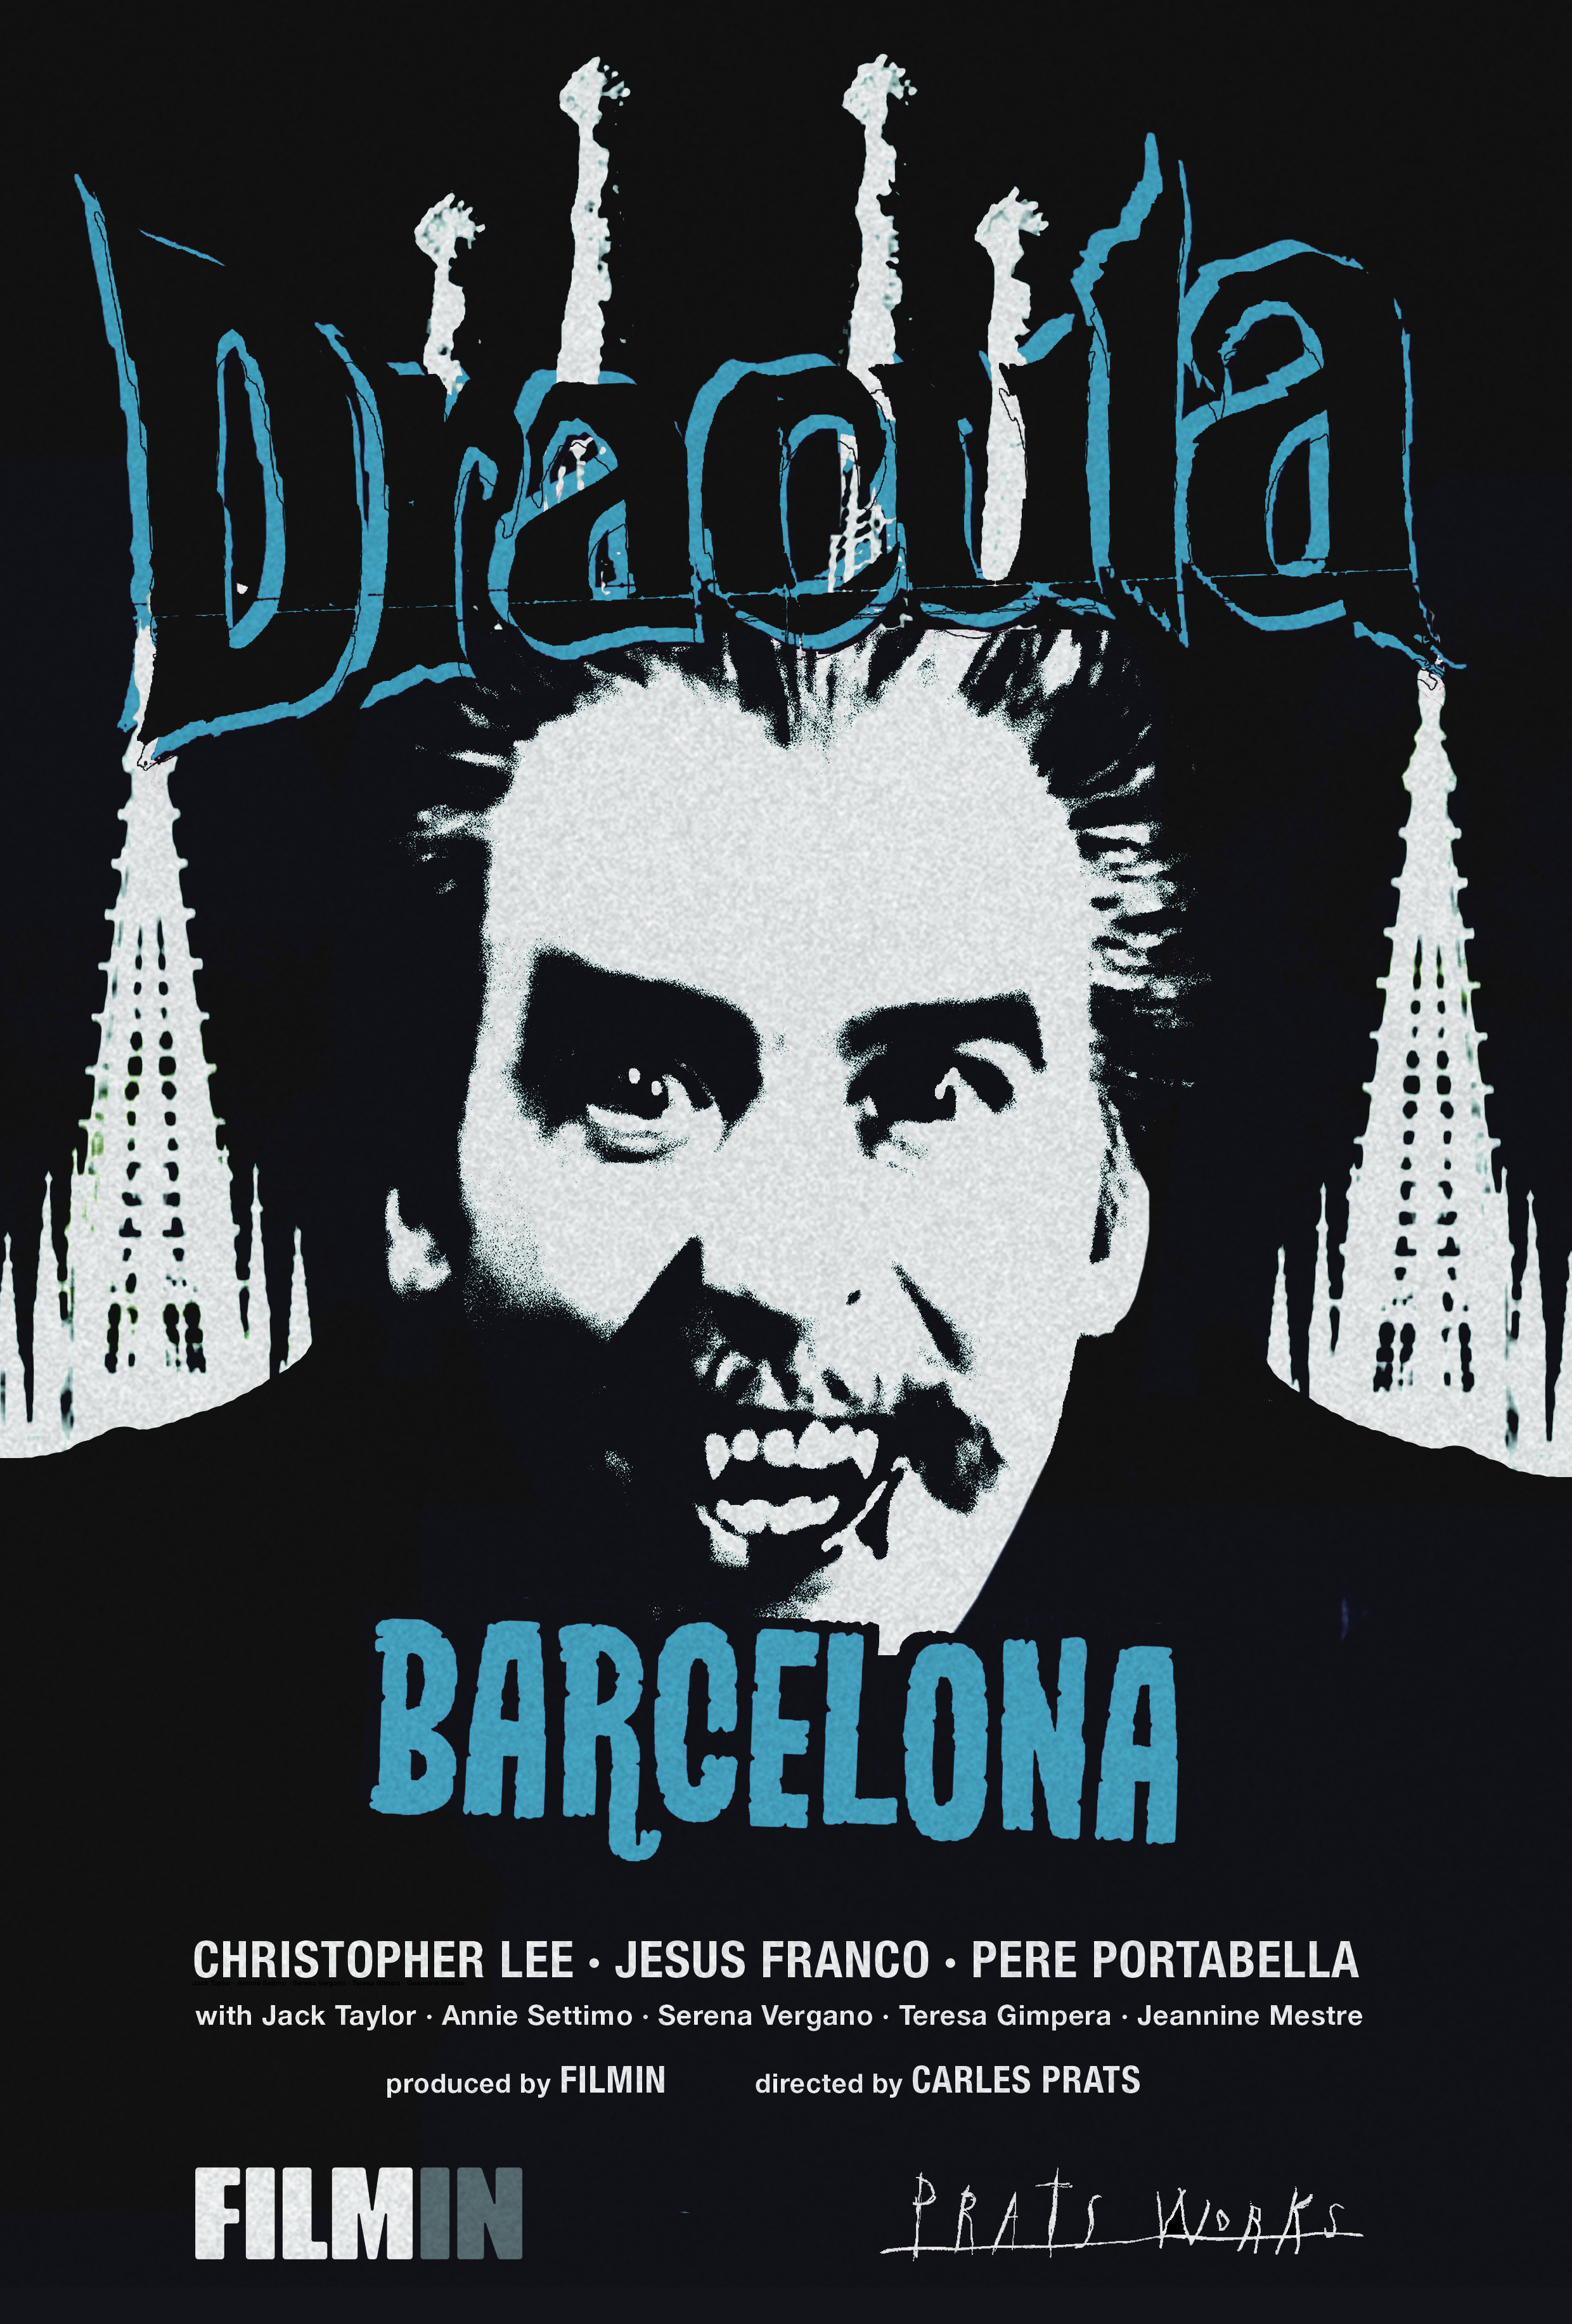 Drácula Barcelona (2017) with English Subtitles on DVD on DVD